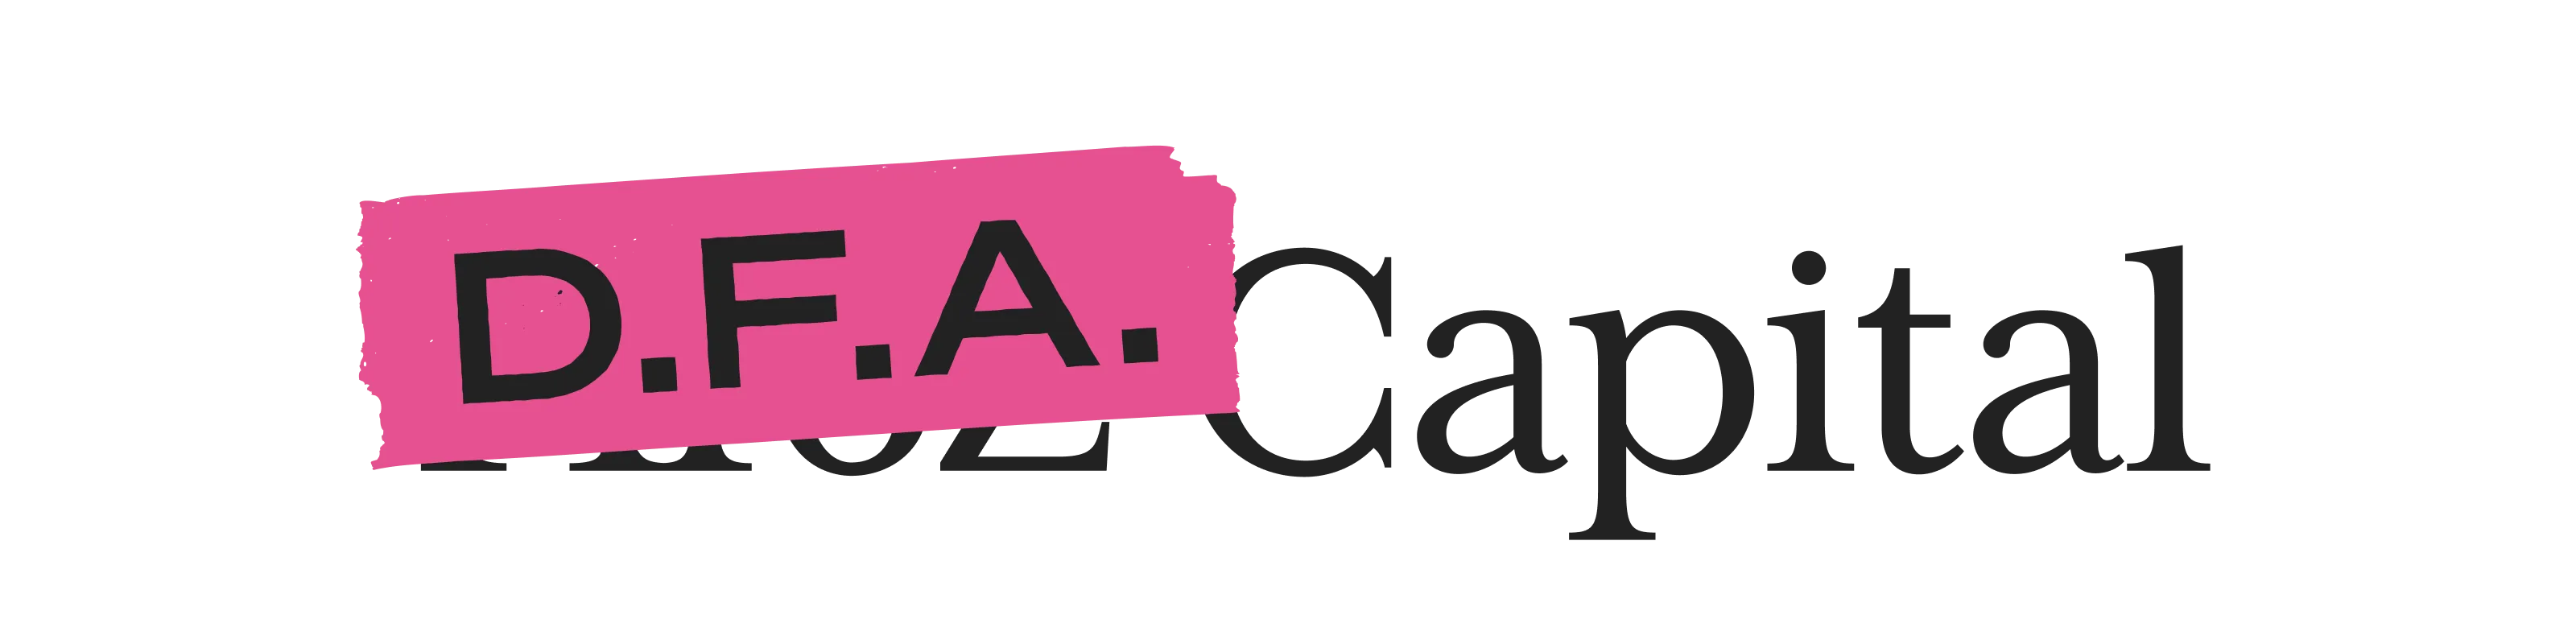 D.F.A. Capital Logo variation